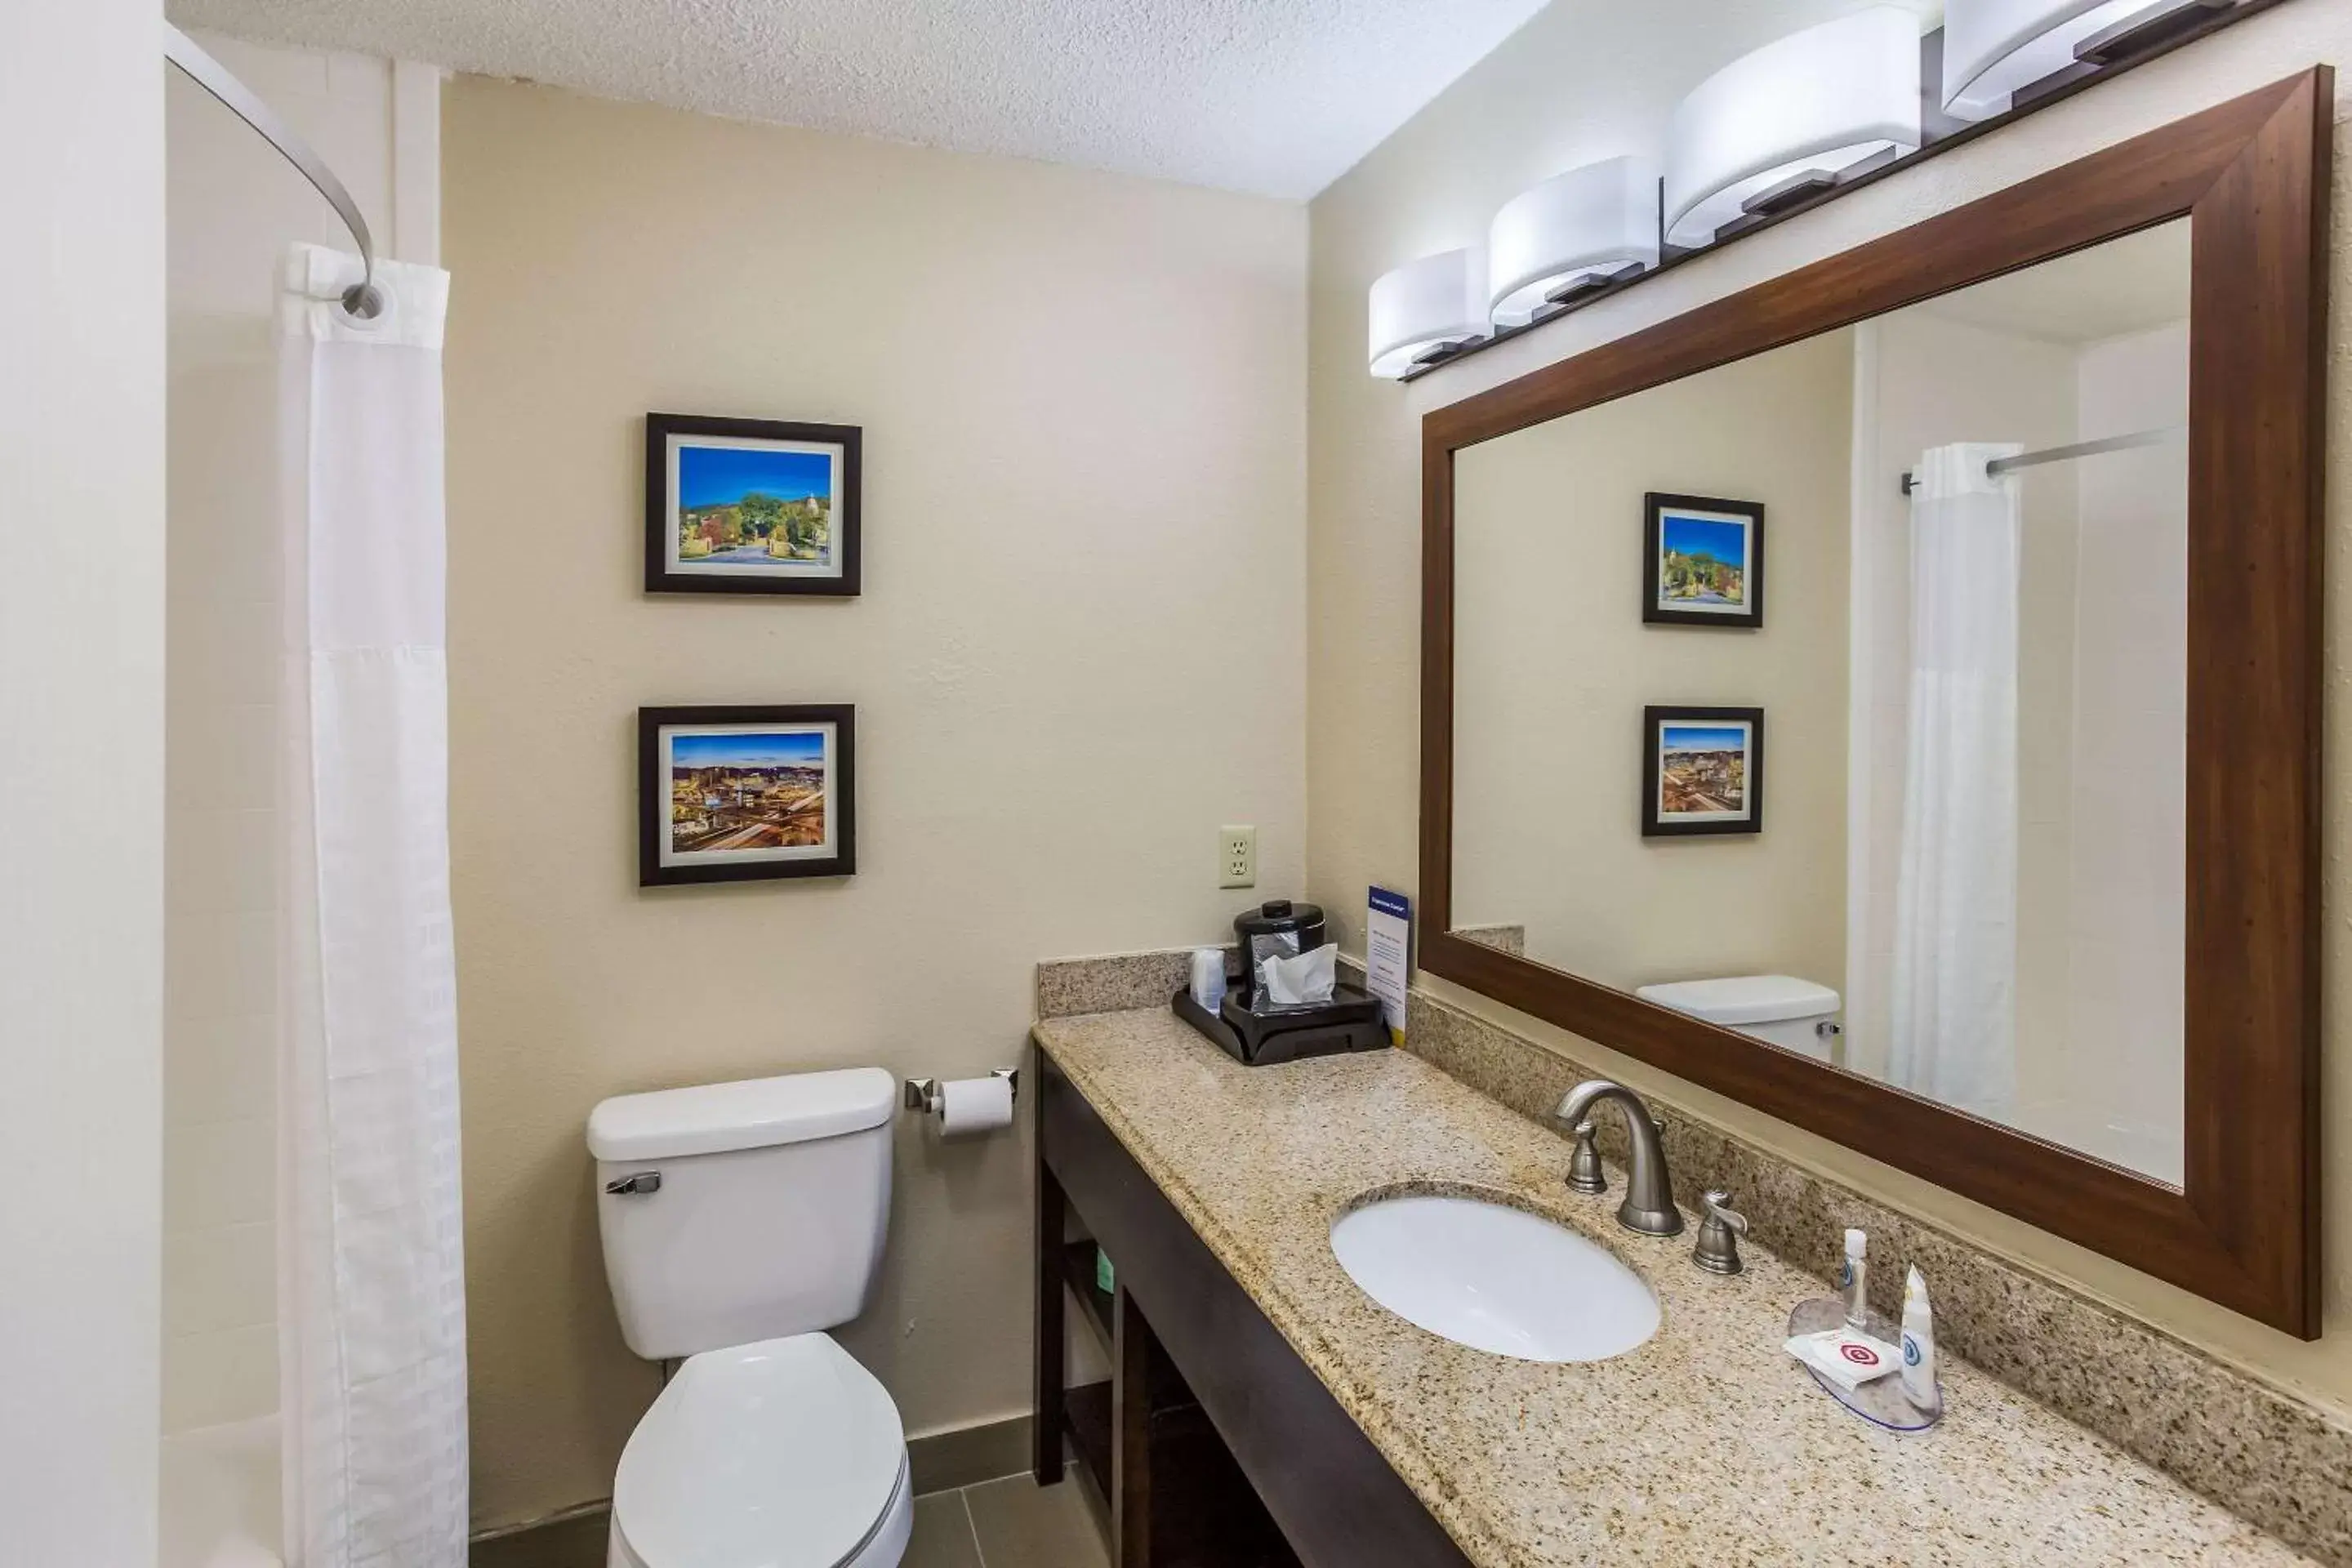 Bathroom in Comfort Inn Charleston, WV